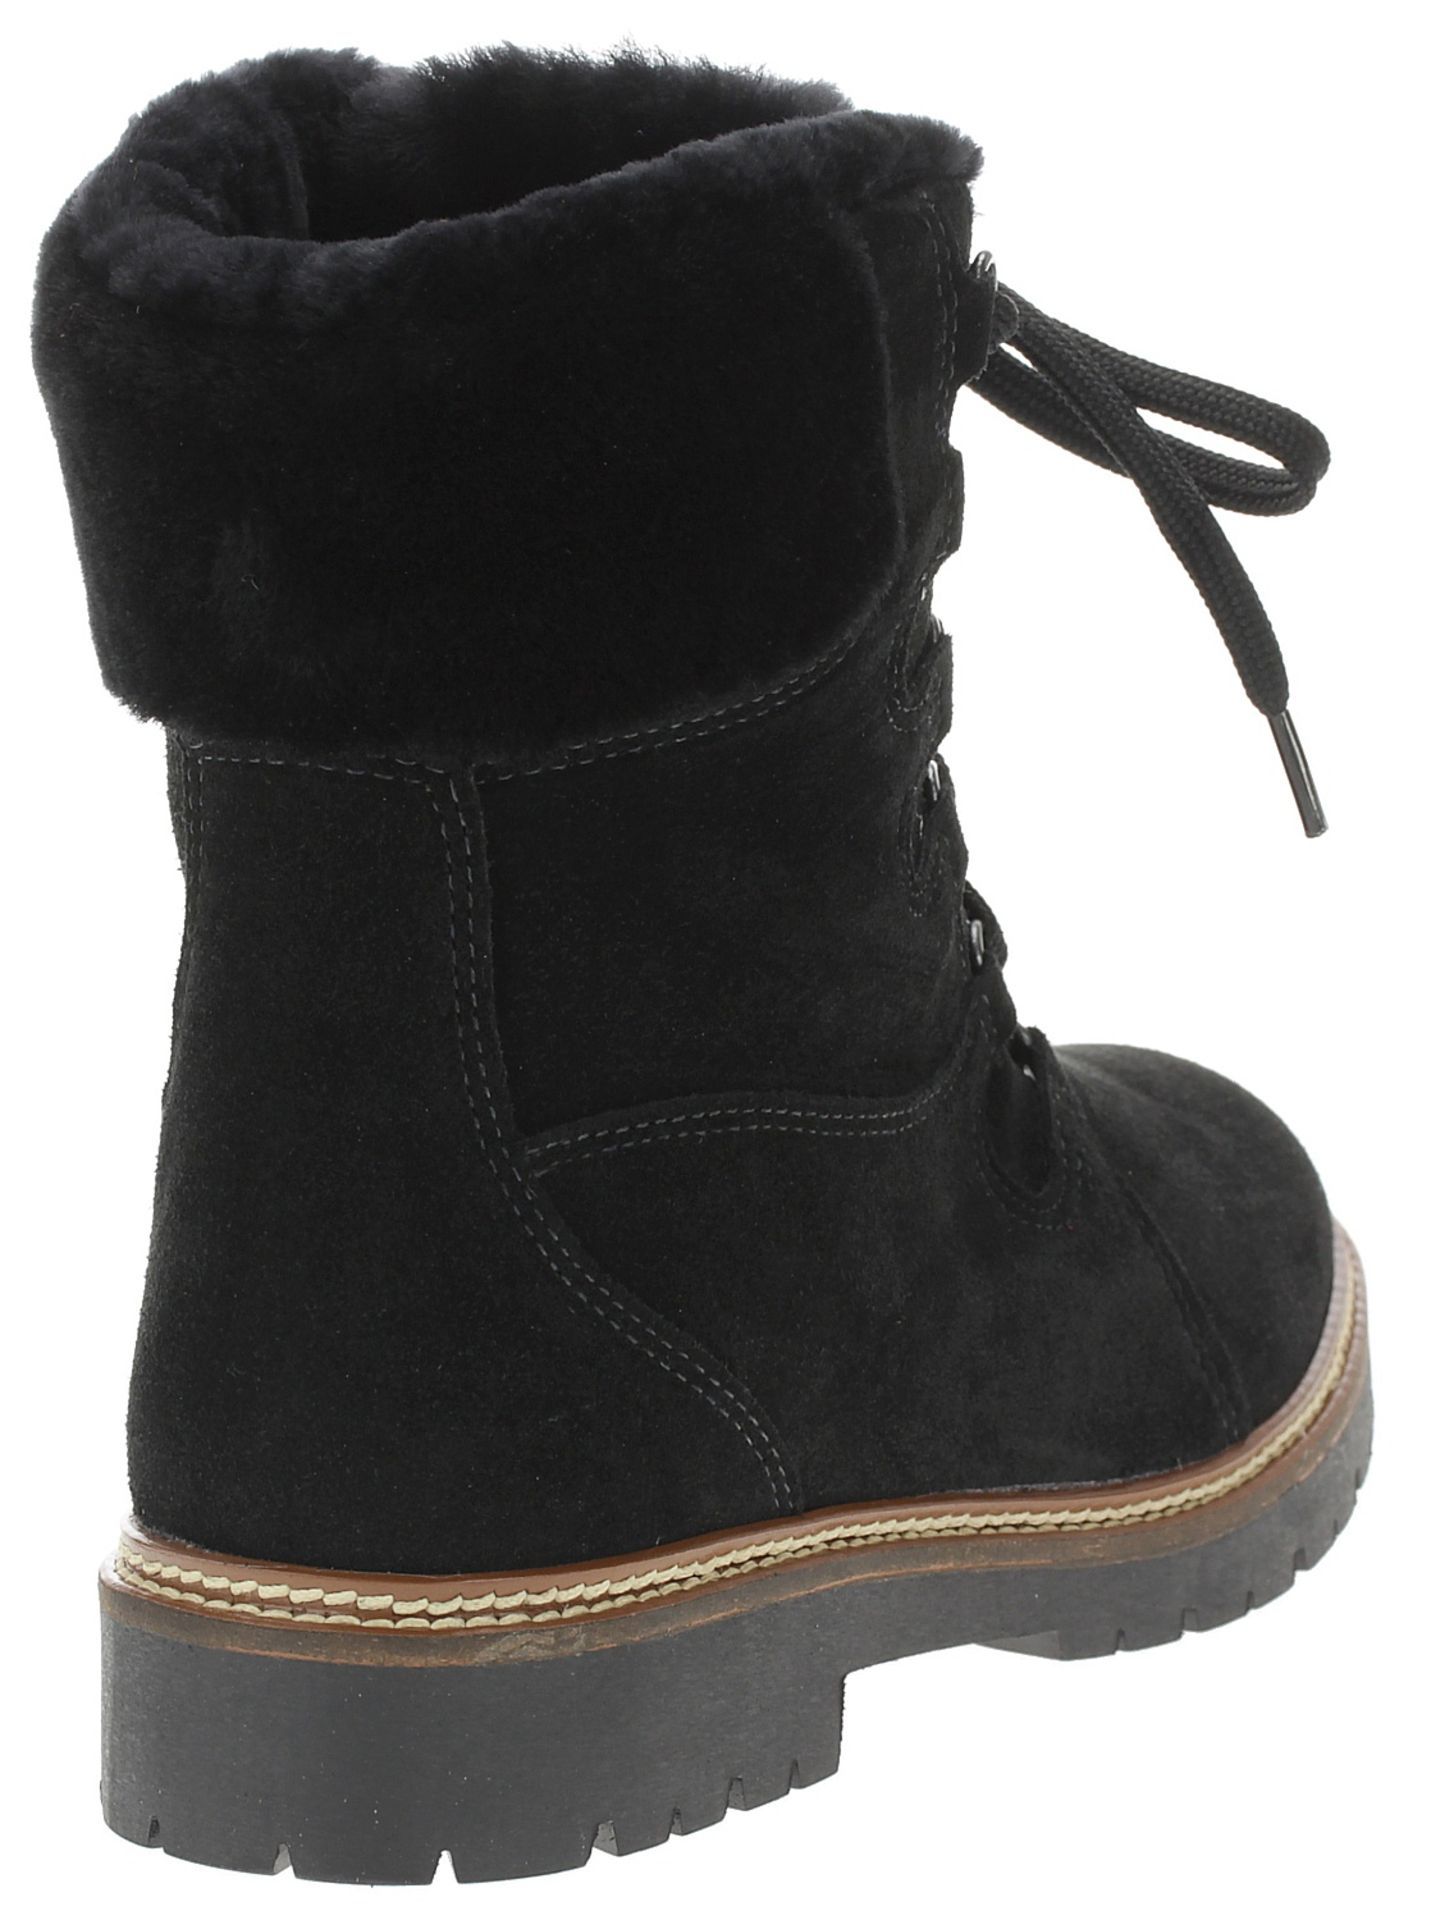 1 x Pair of Designer Olang Meribel 81 Nero Women's Winter Boots - Euro Size 40 - Brand New Boxed - Image 3 of 5